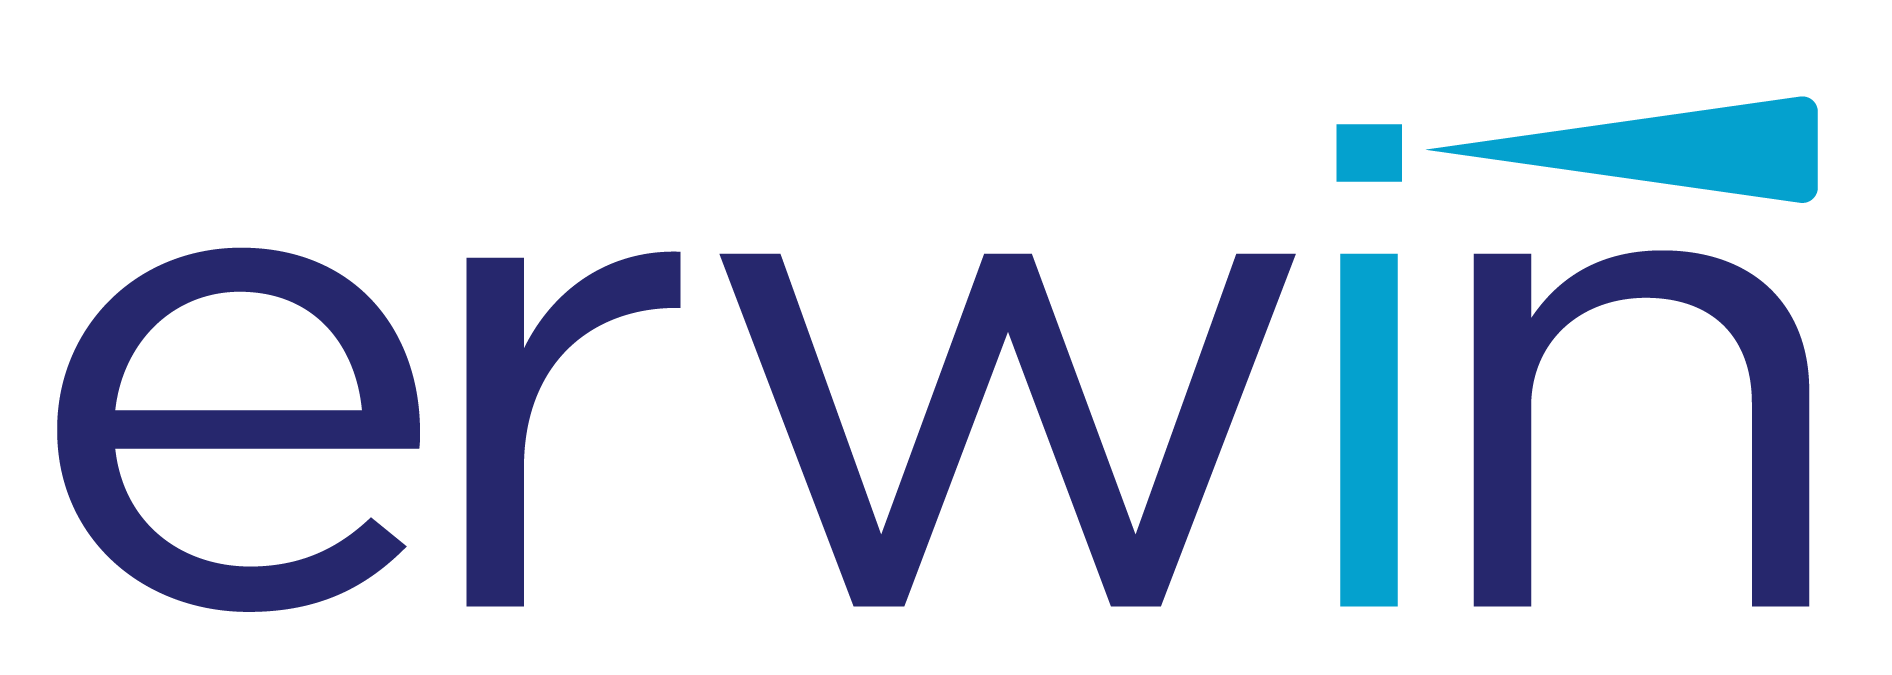 Erwin - logo